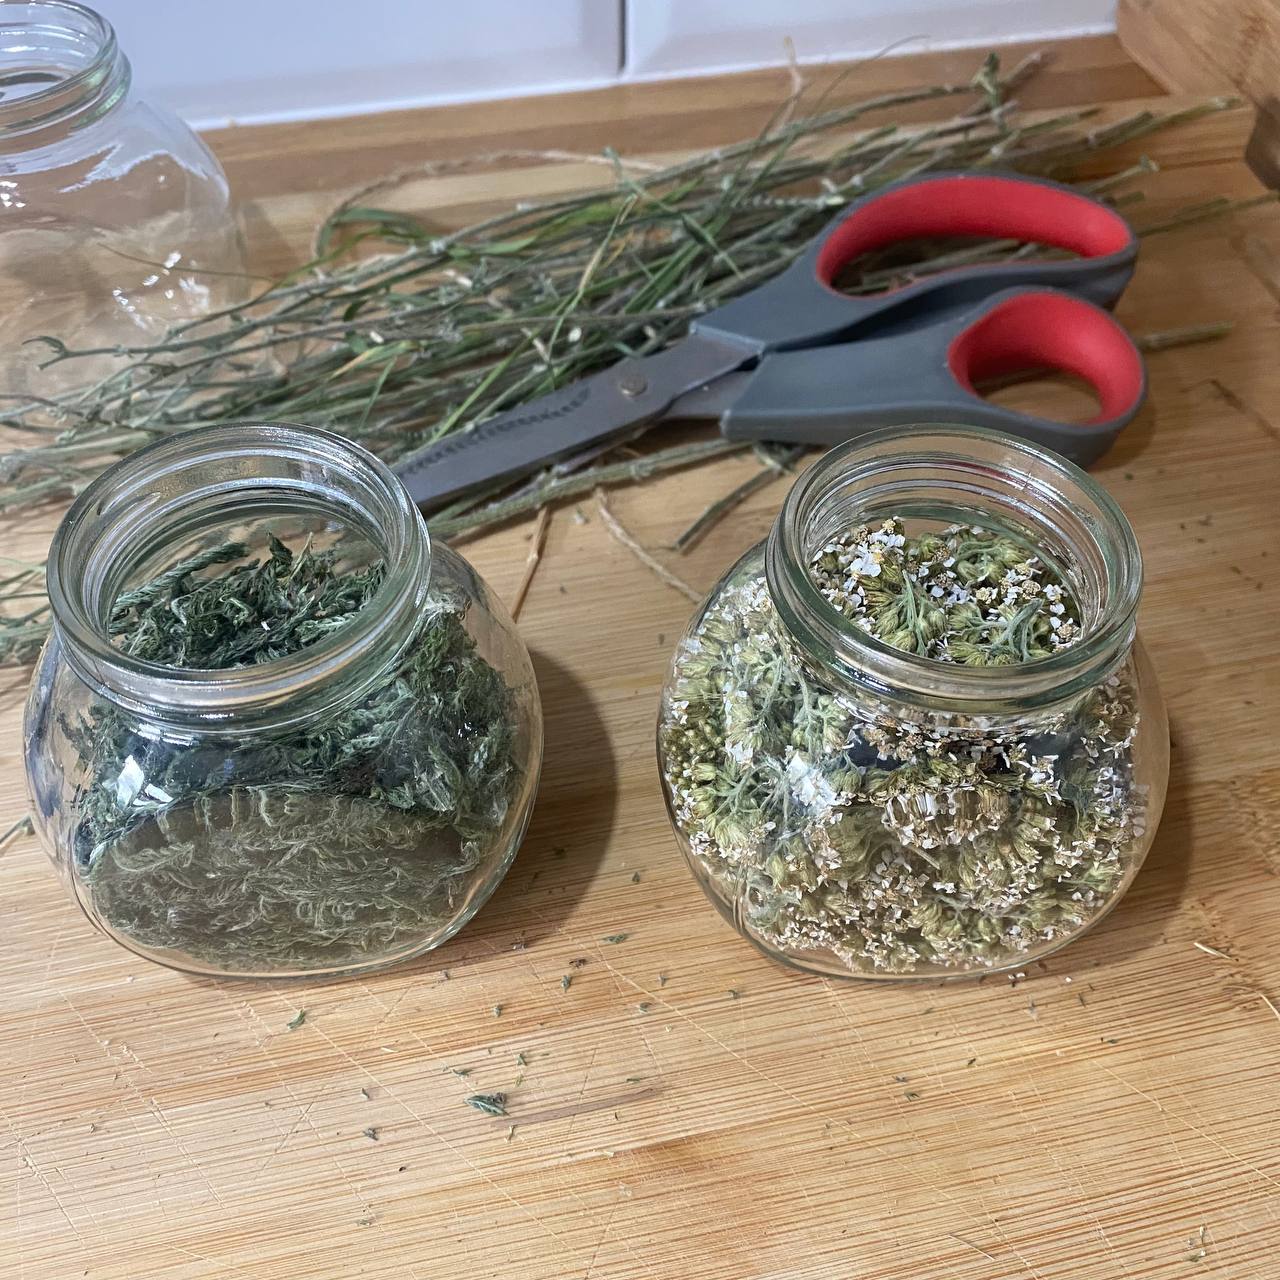 Dried Yarrow in jars